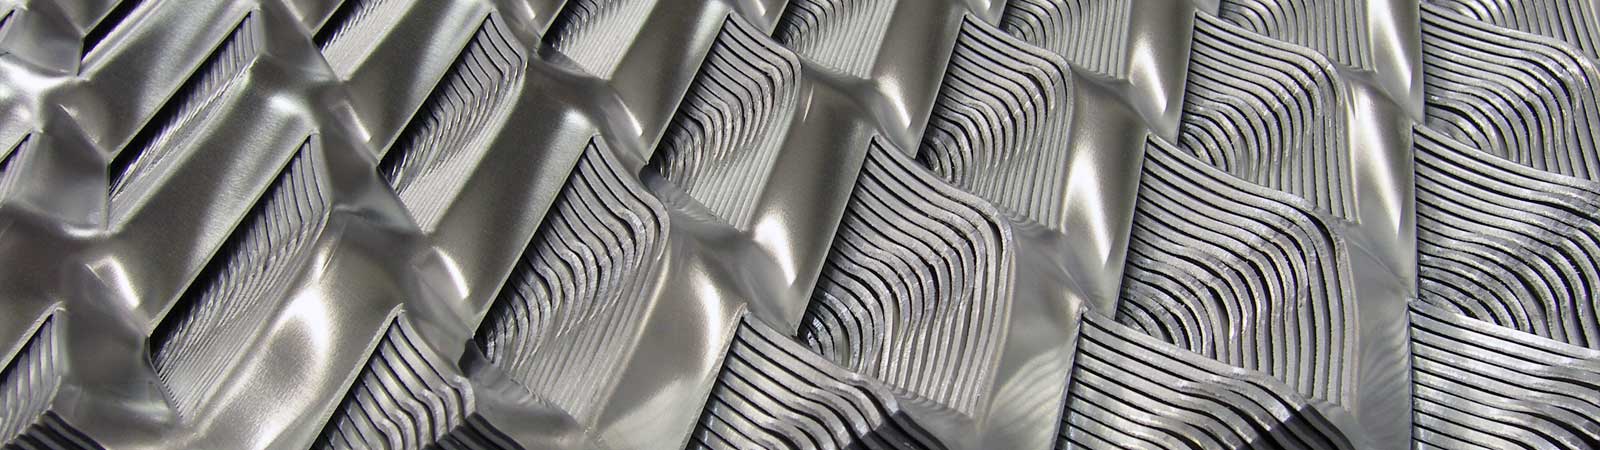 Aluminium streched metal sheets